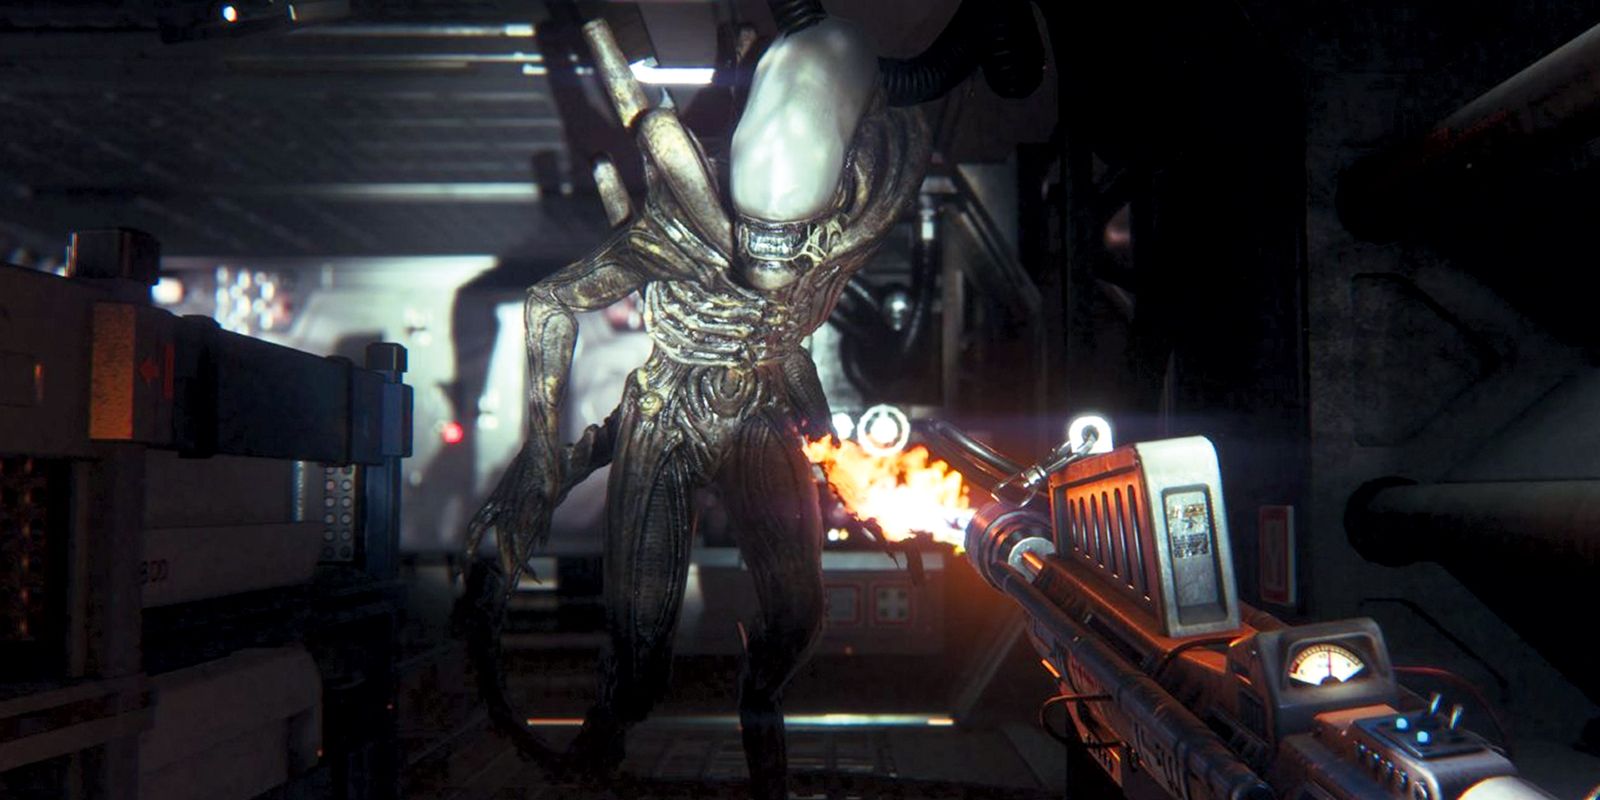 Amanda Ripley Battling The Alien In Alien: Isolation